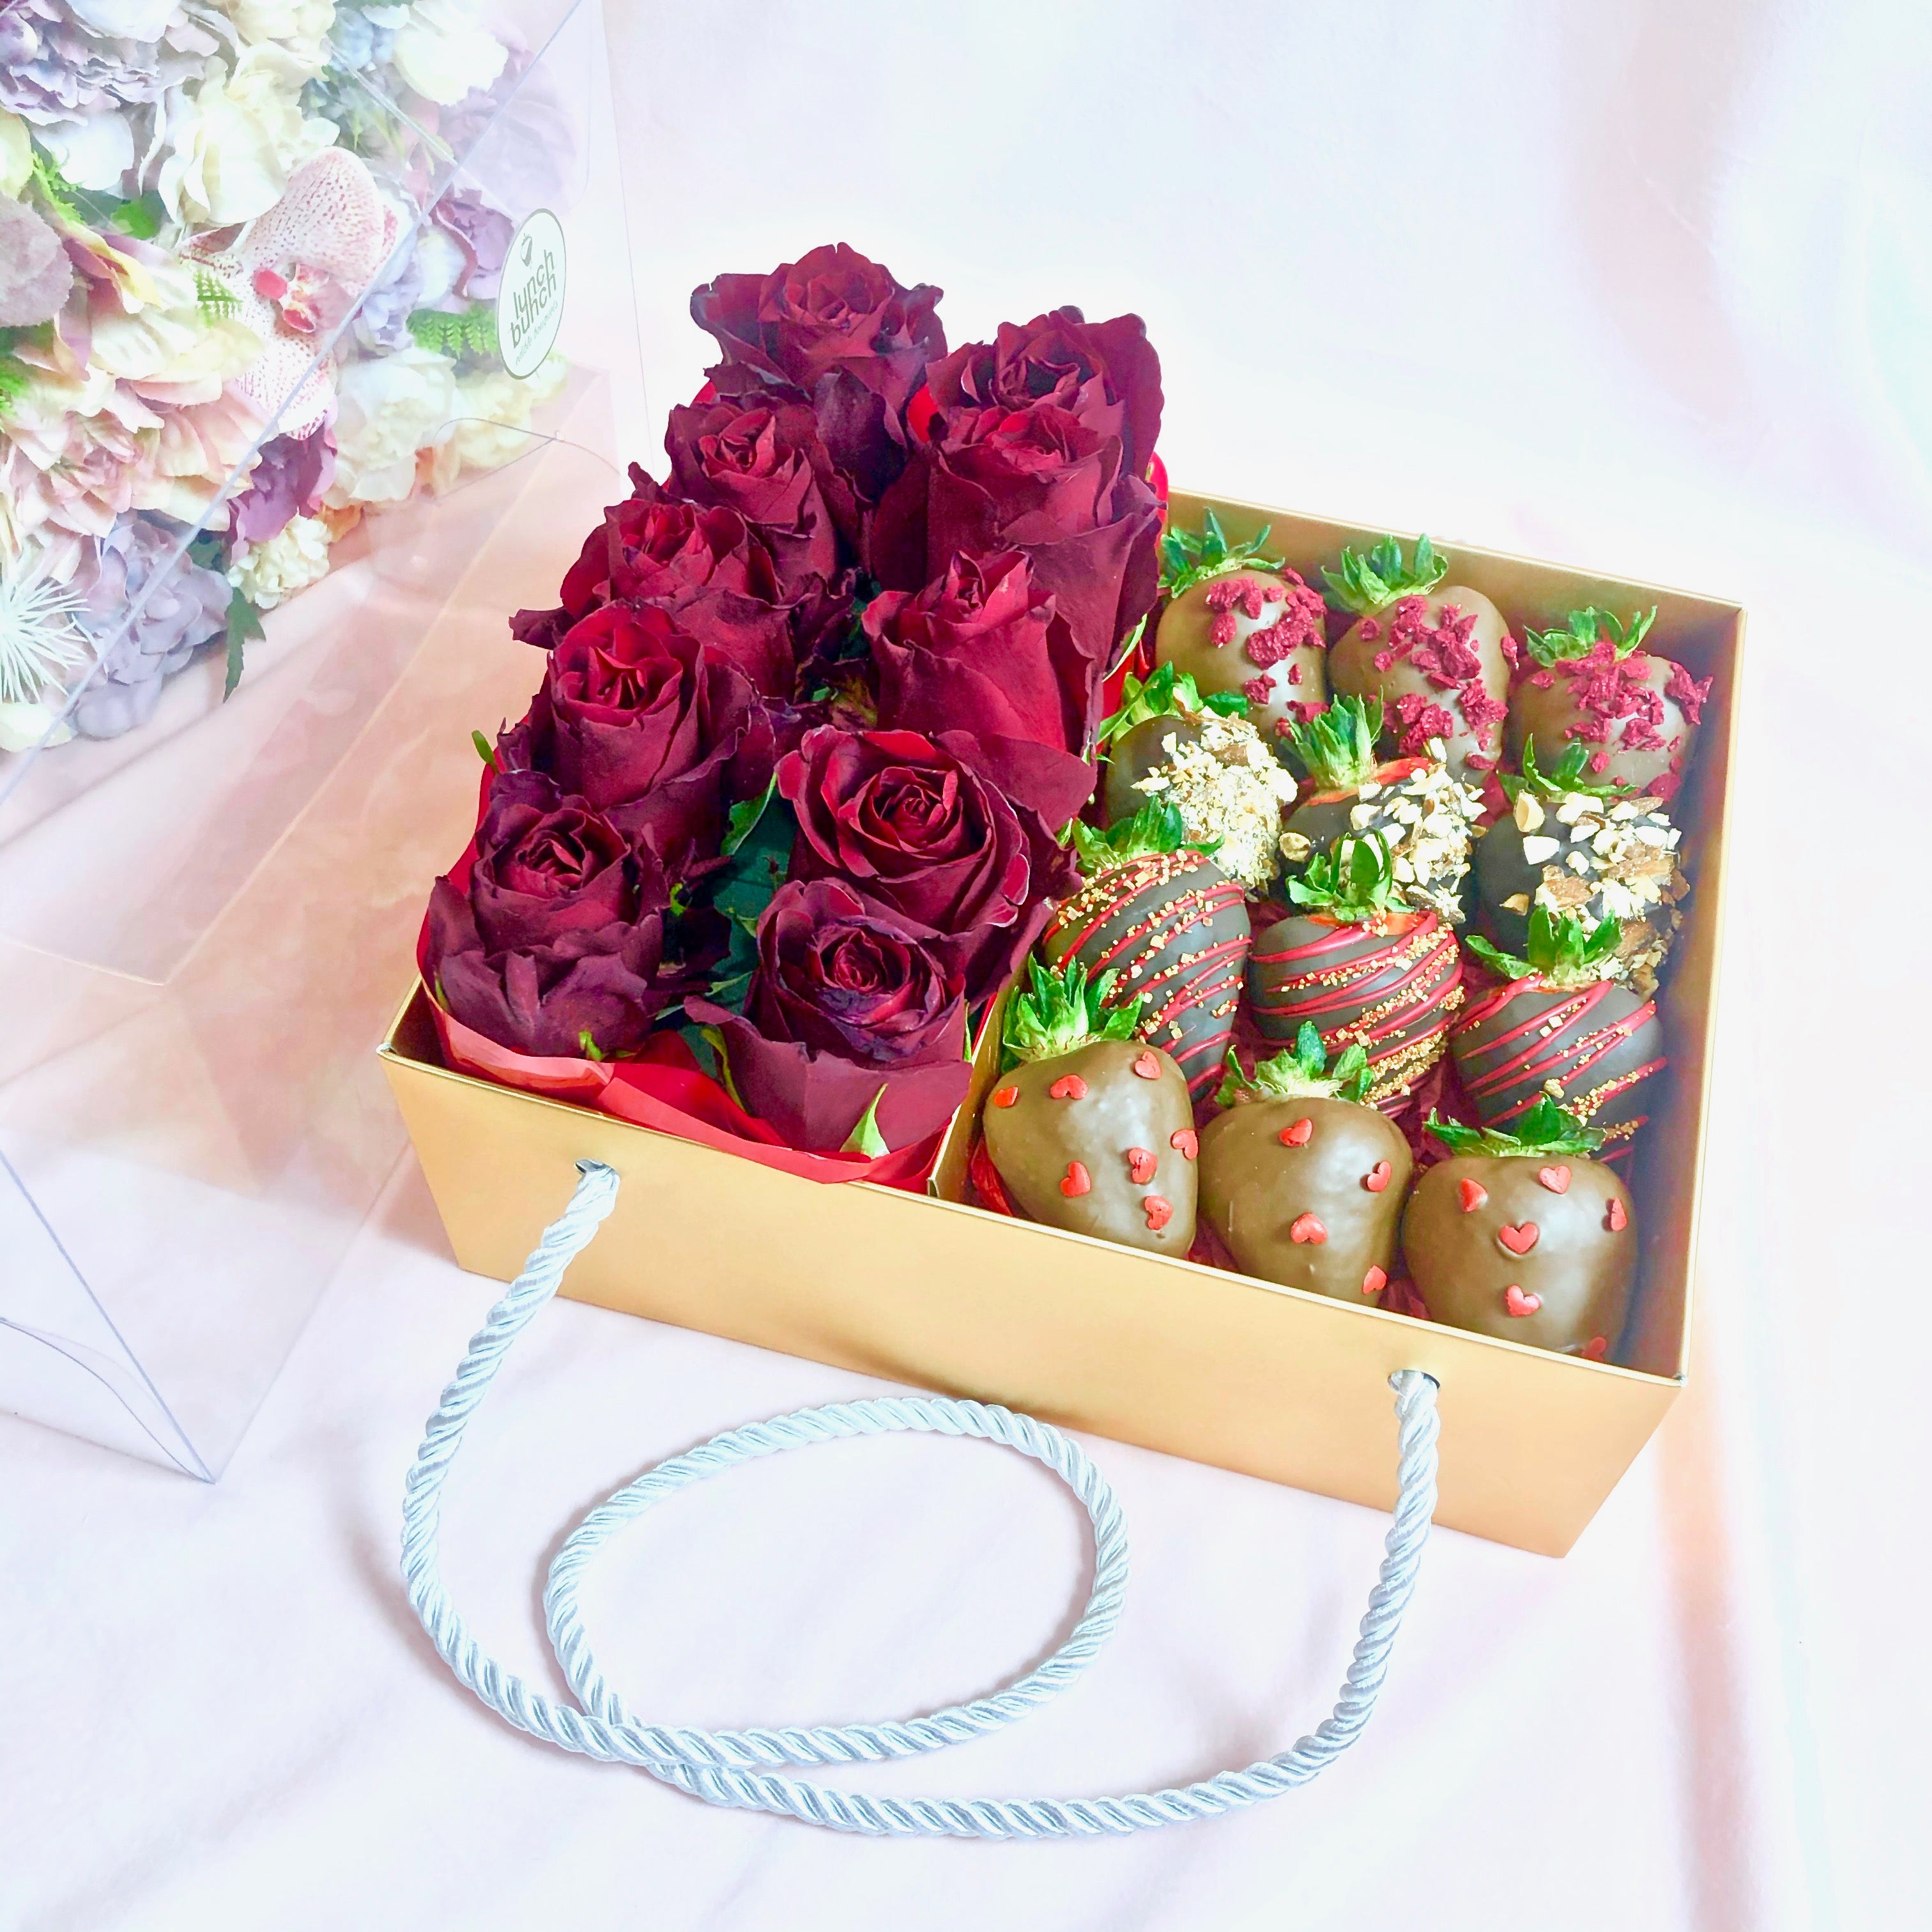 Chocolate Strawberry & Roses Gift Hamper luxury birthday present for her Ferrero Rocher Gift Box